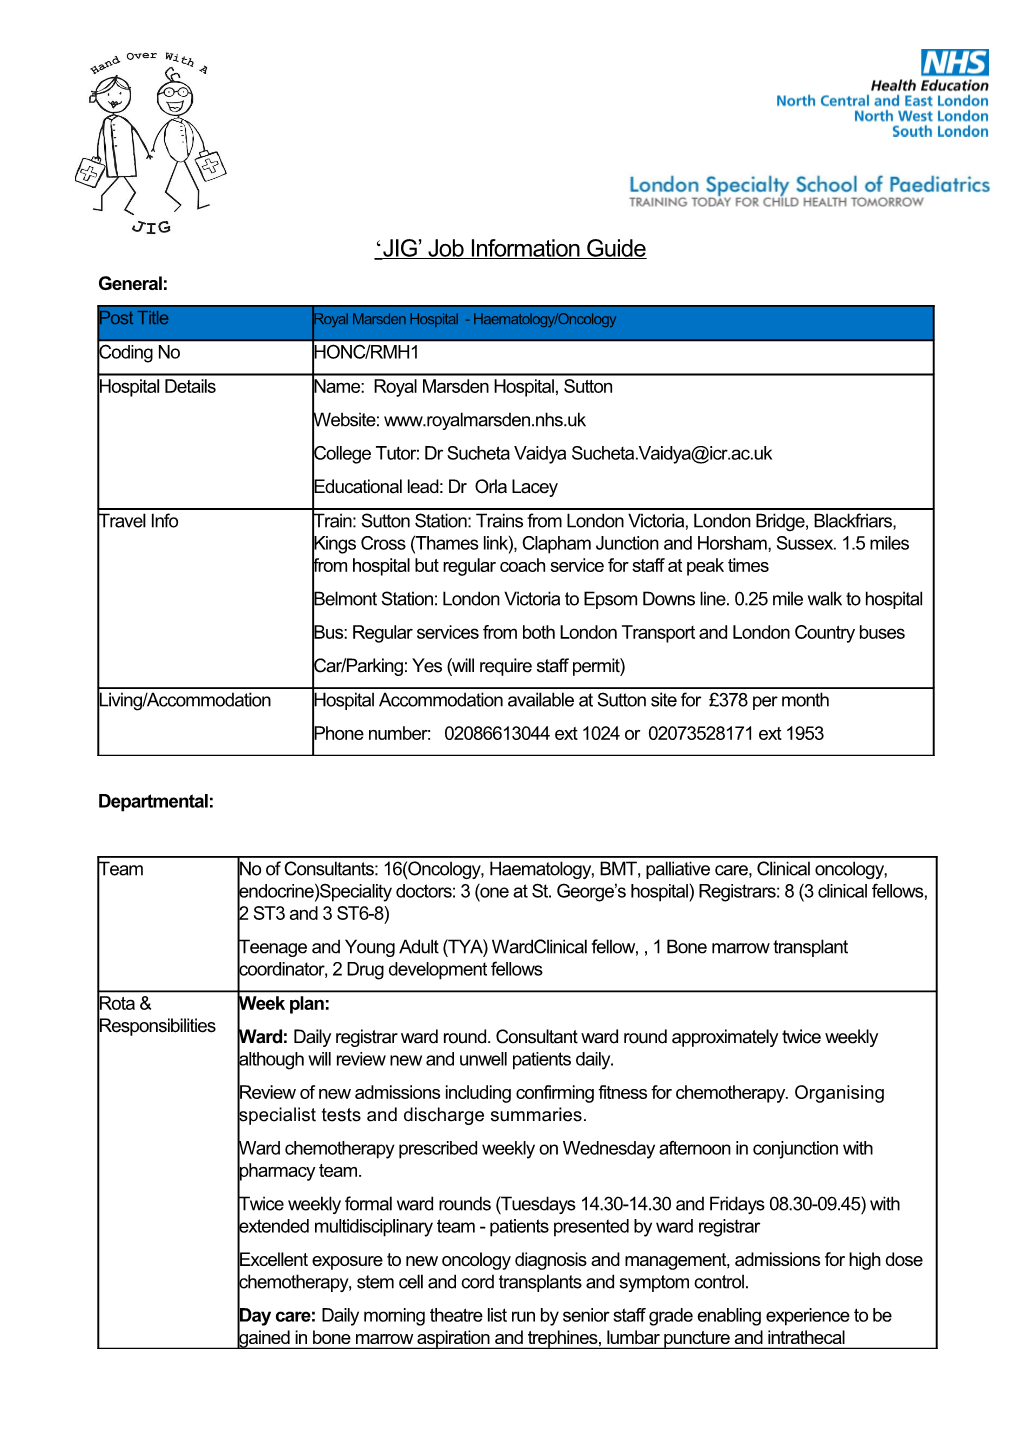 JIG Job Information Guide s1